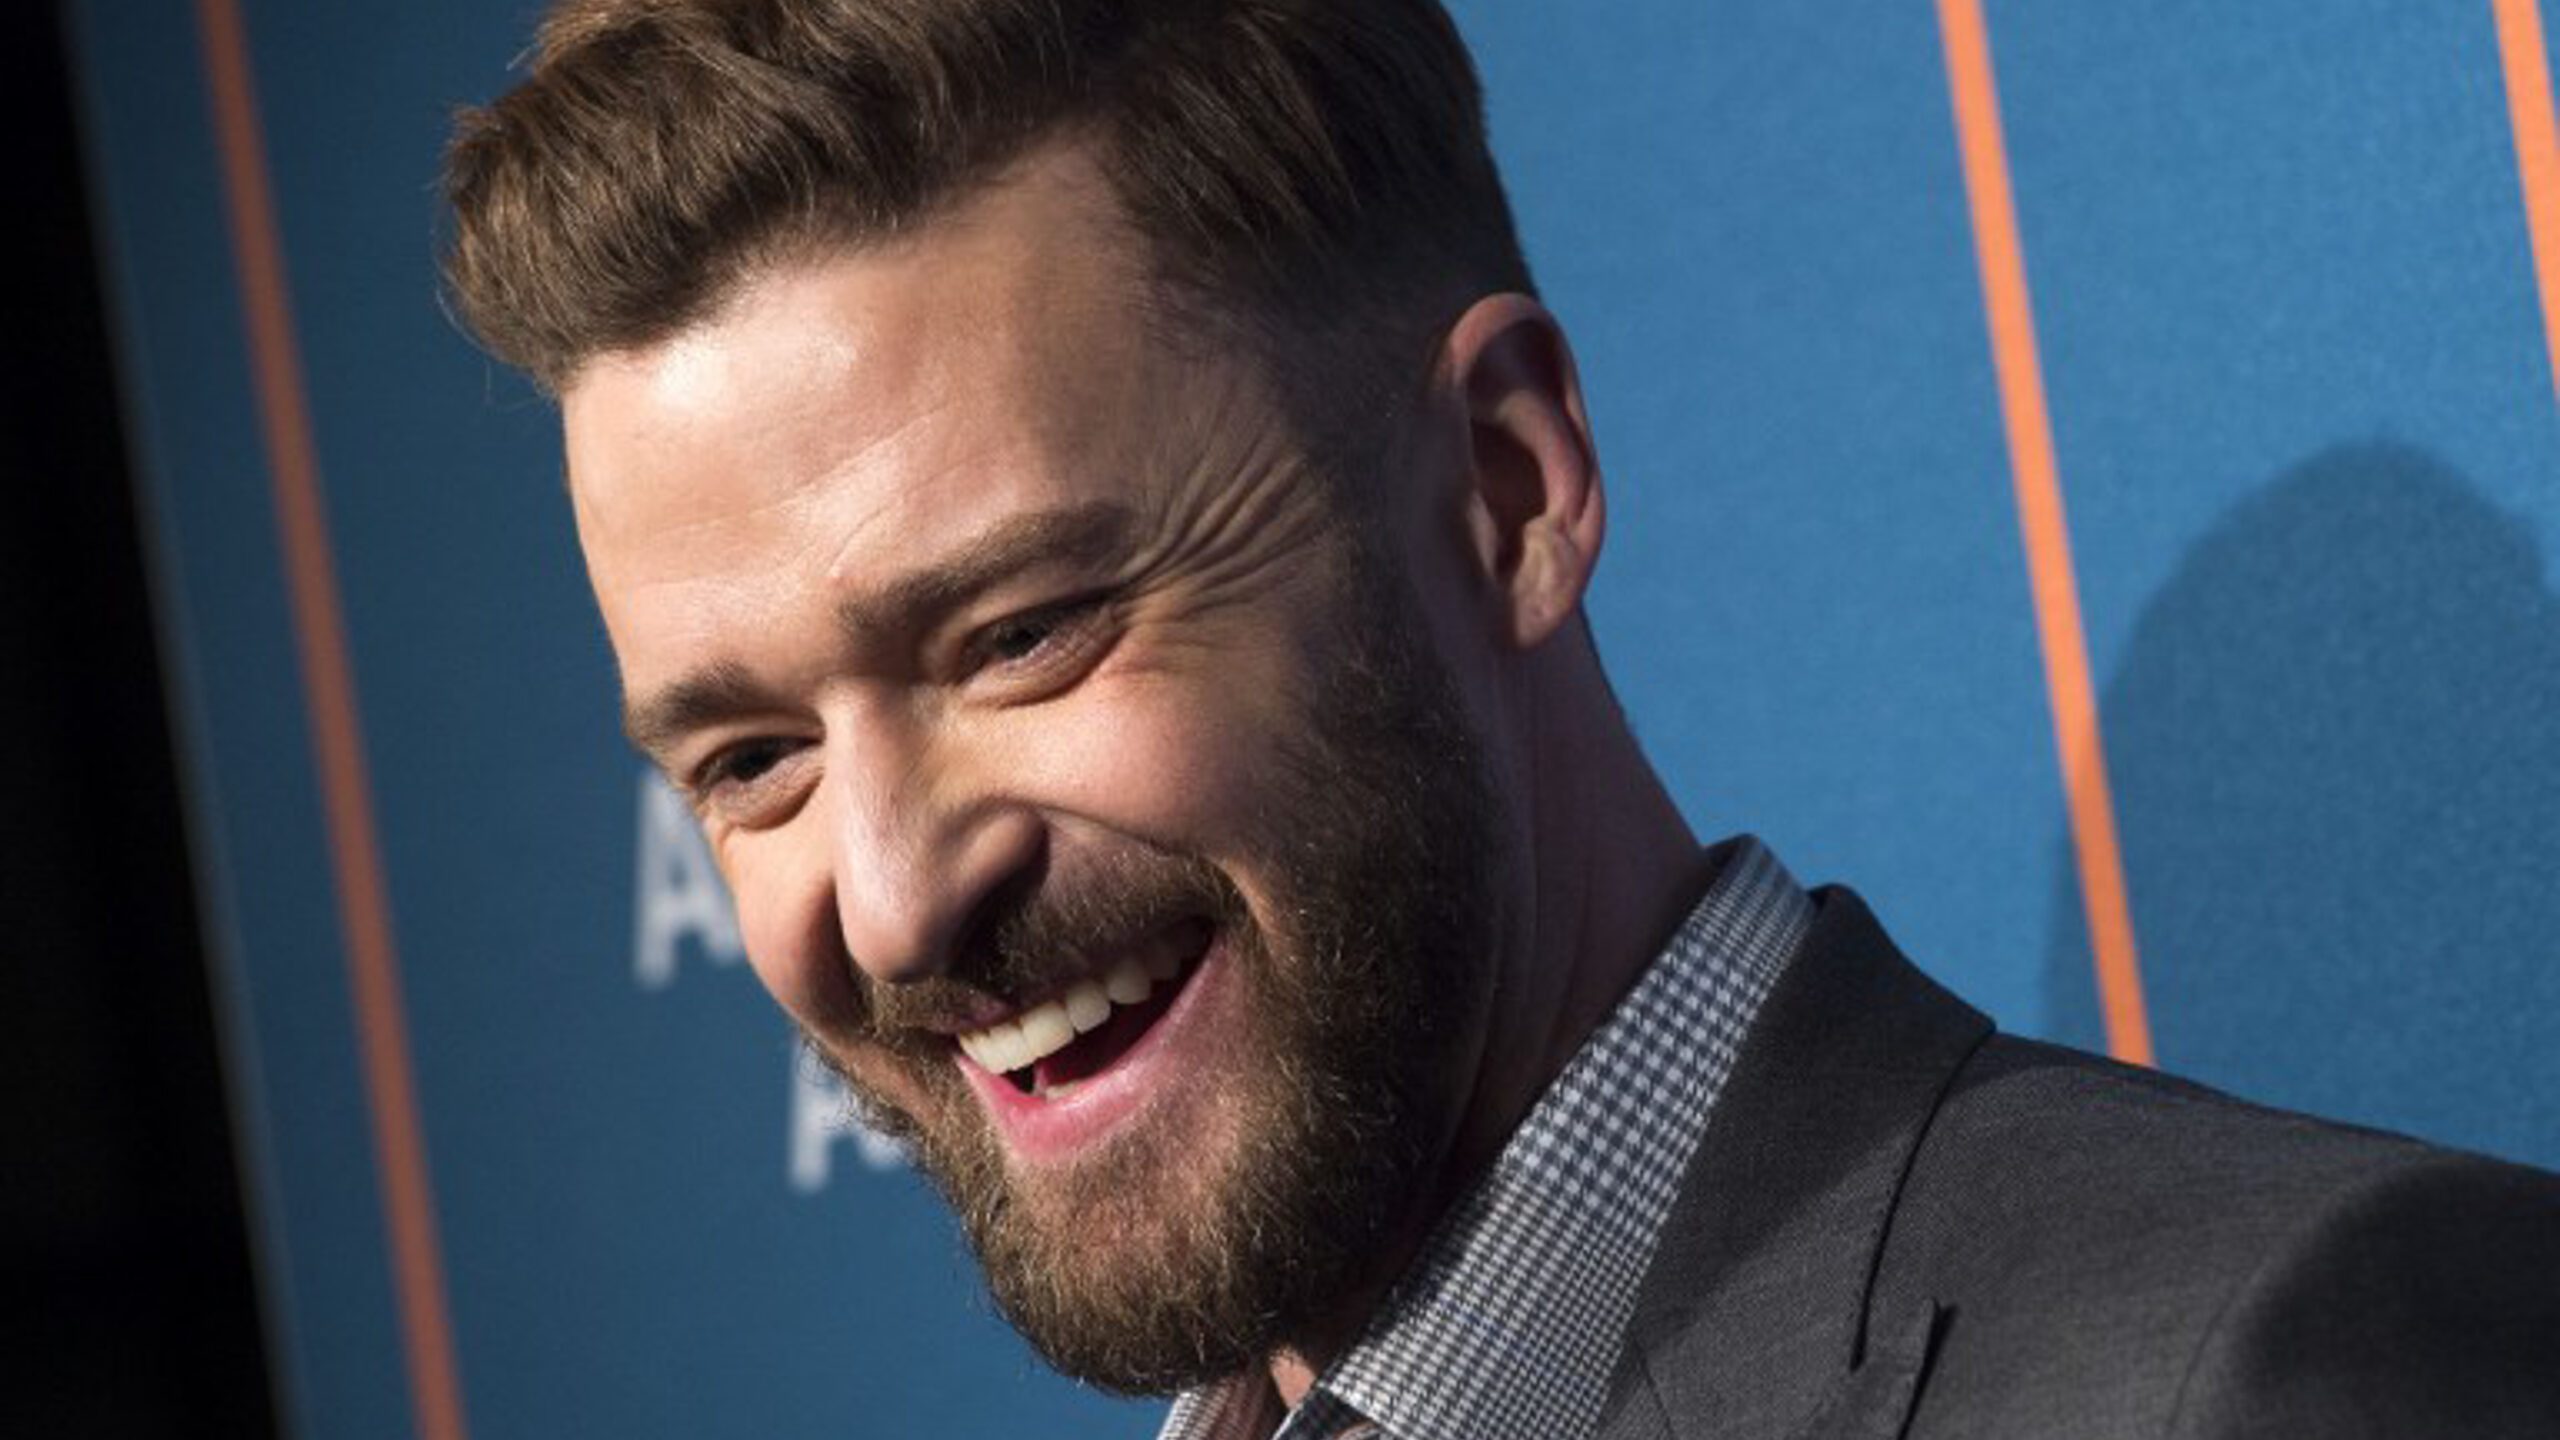 NFL: Justin Timberlake to headline Super Bowl halftime show